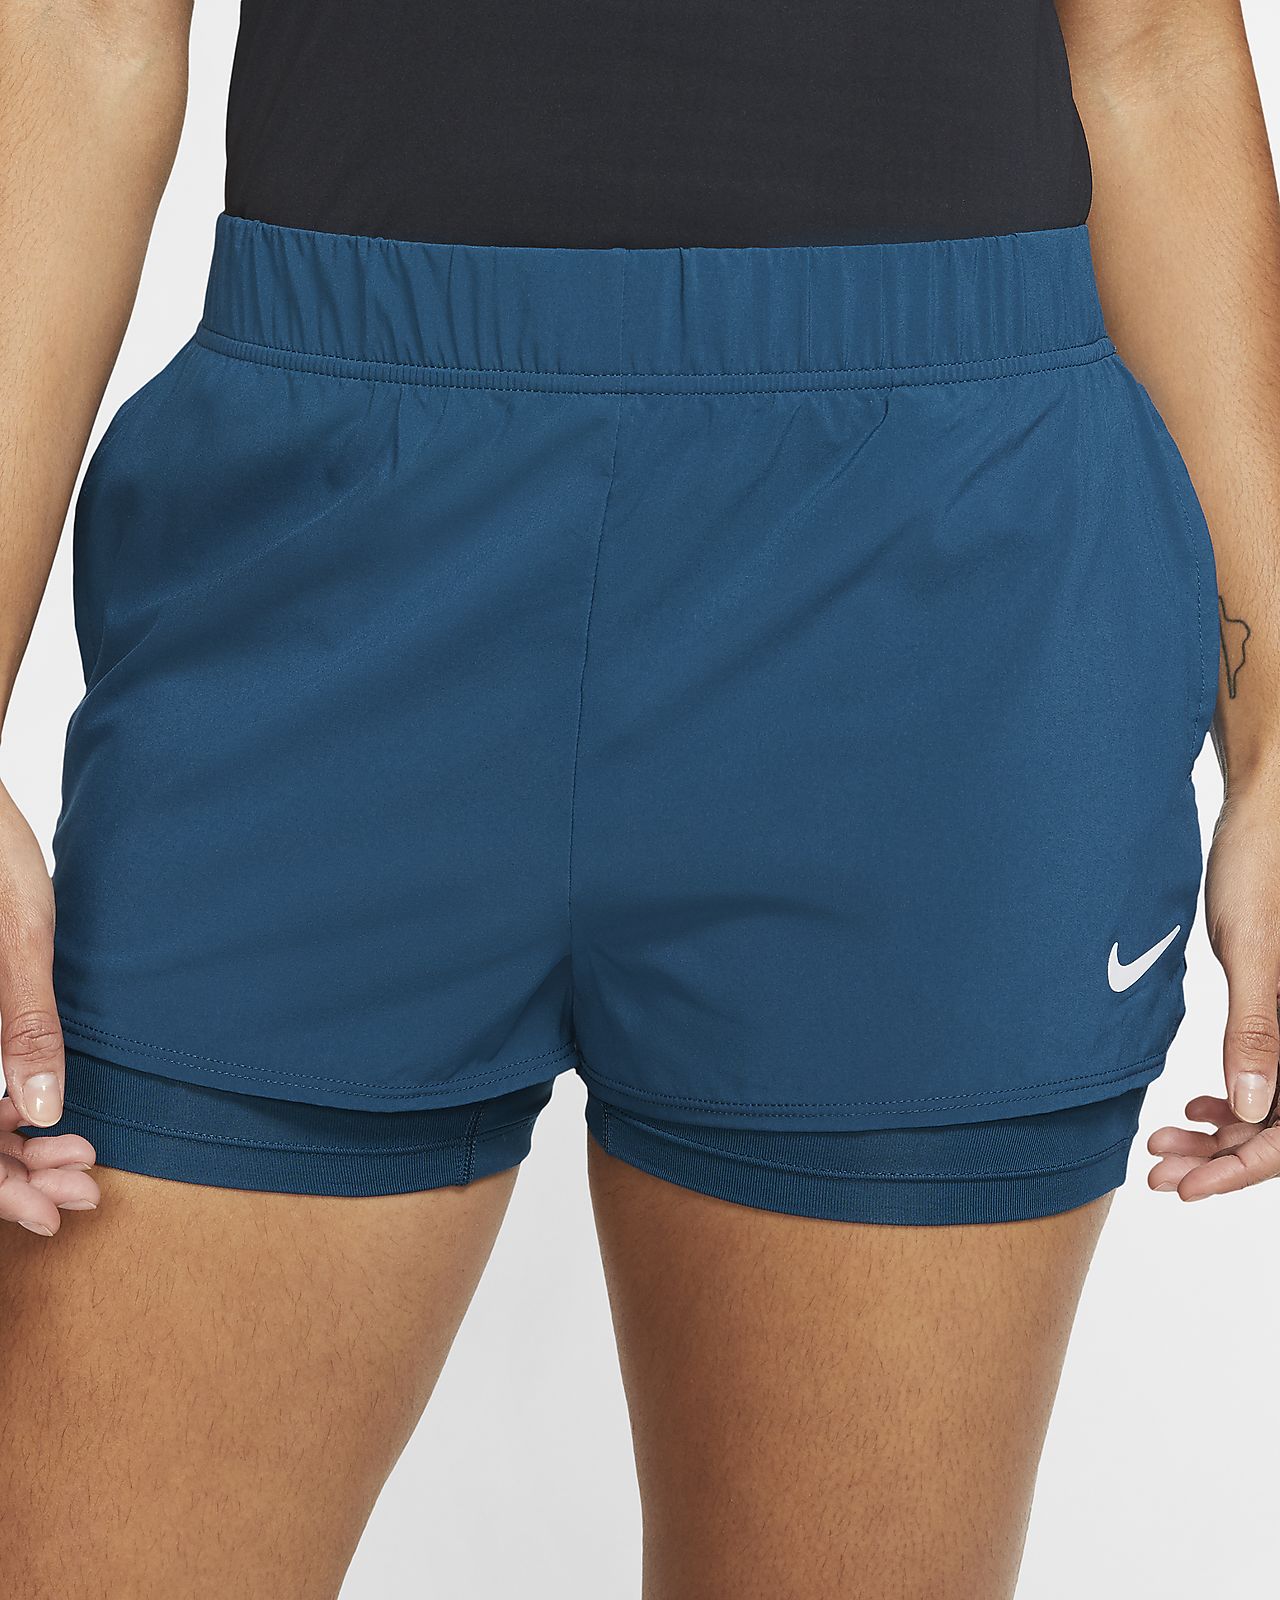 women's tennis shorts nikecourt flex